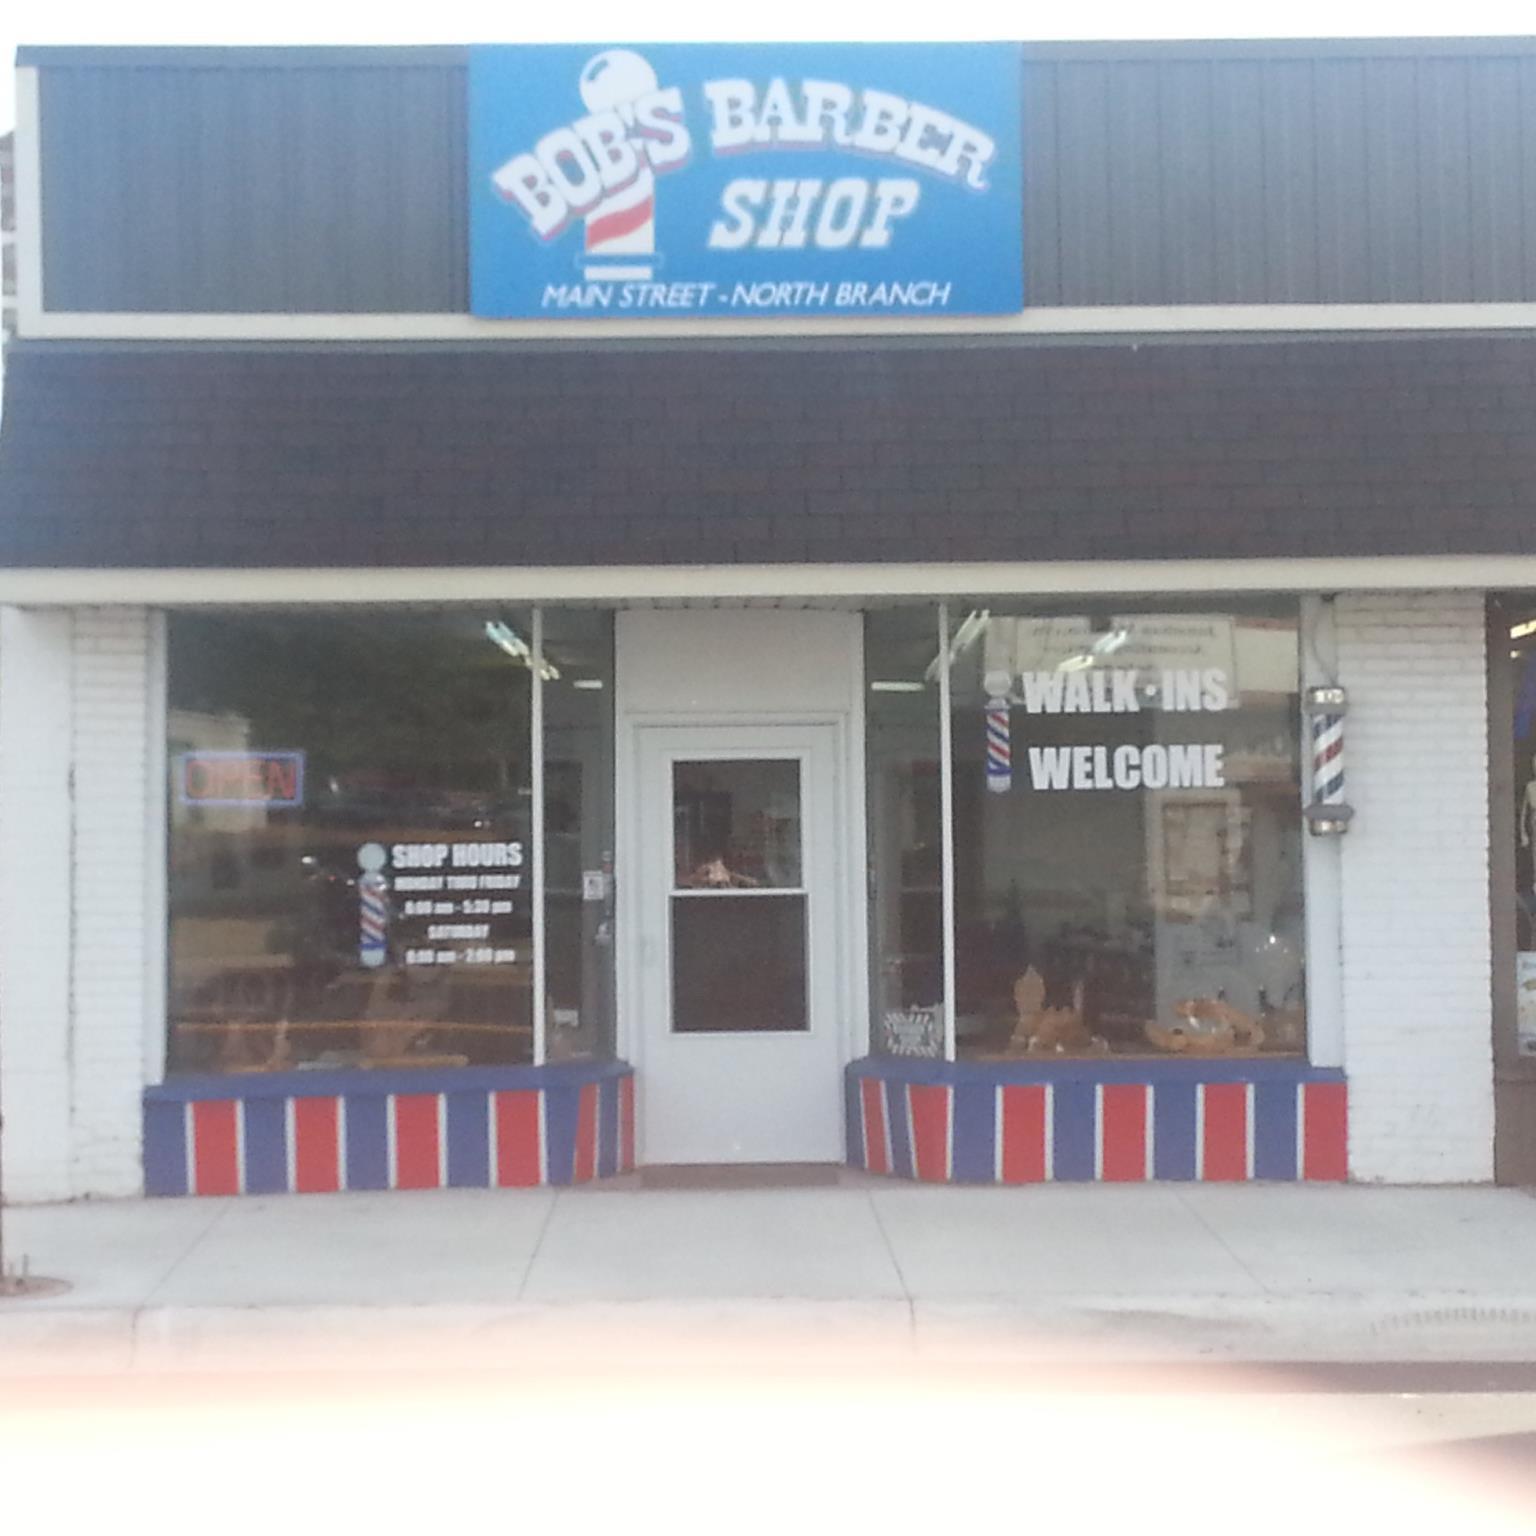 Bob's Barber Shop 6427 Main St, North Branch Minnesota 55056